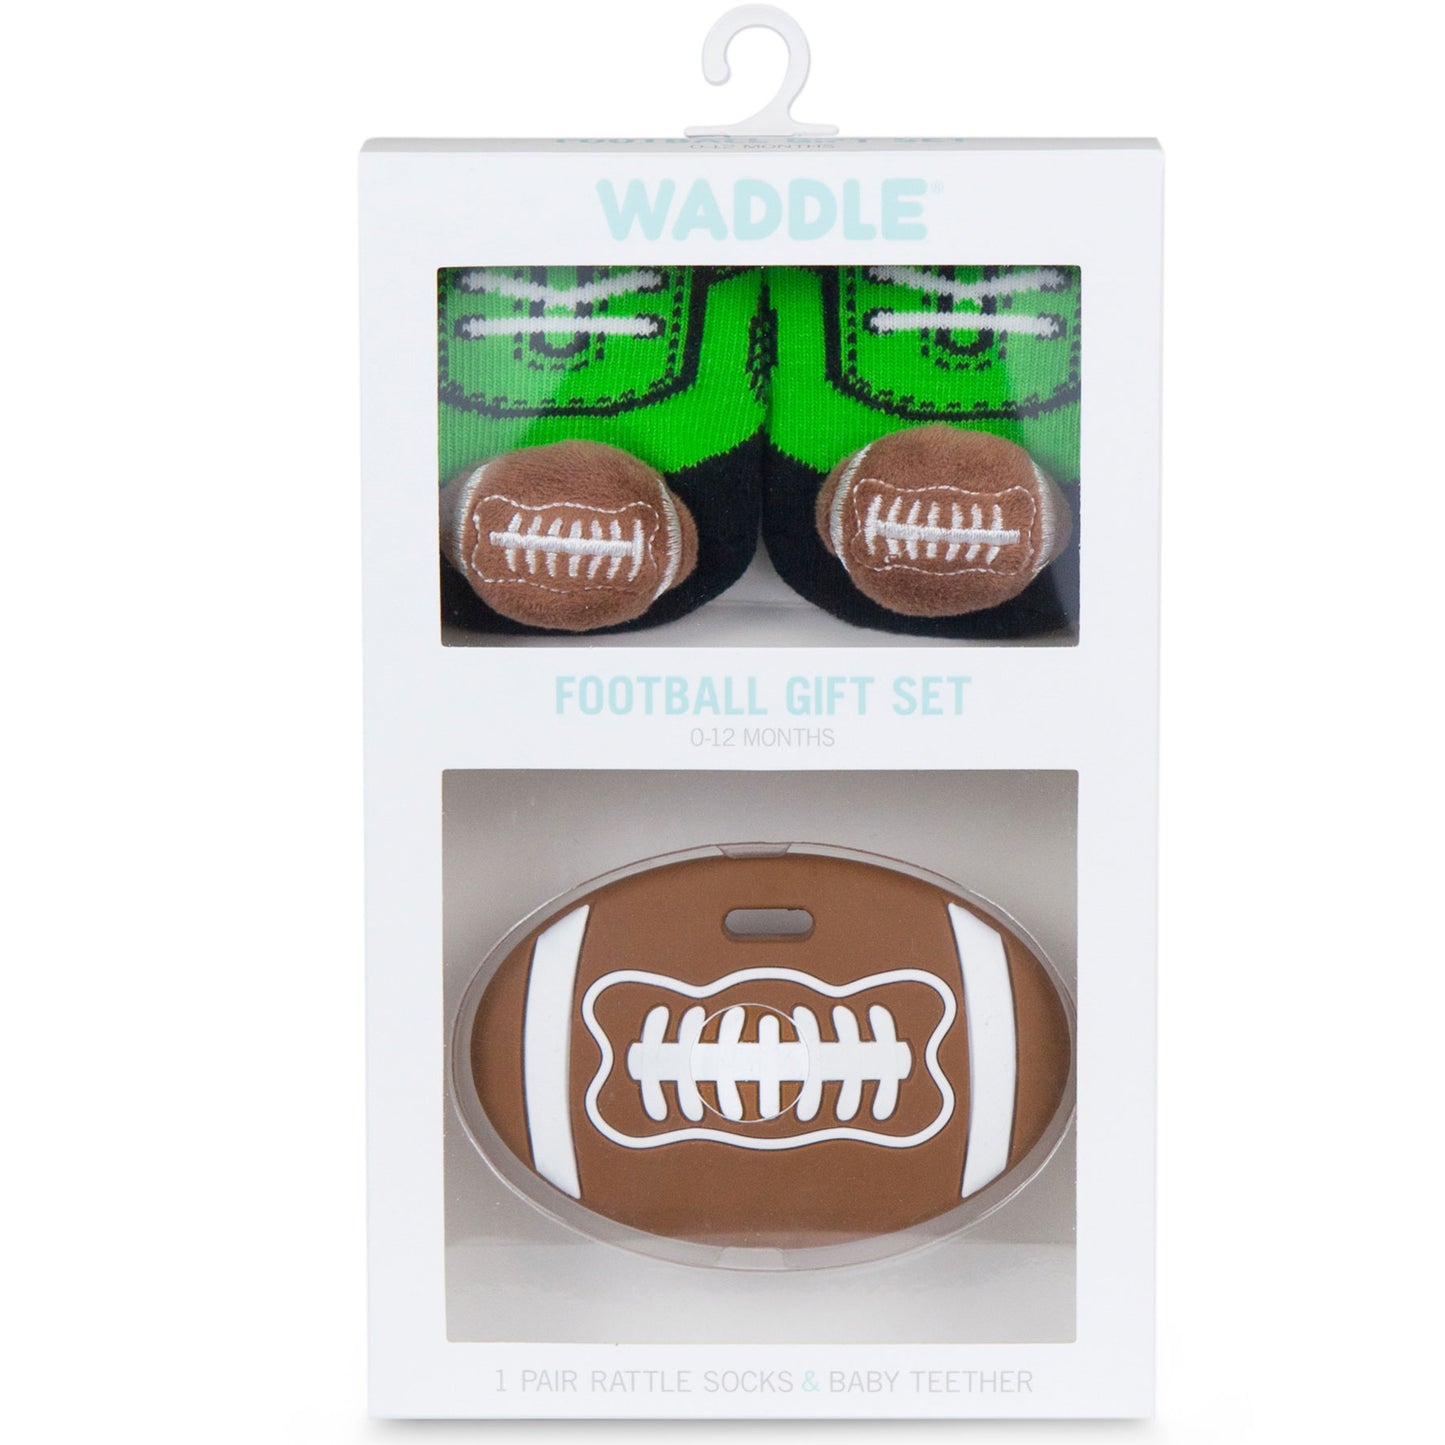 Waddle Socks and Teether Gift Set - Football